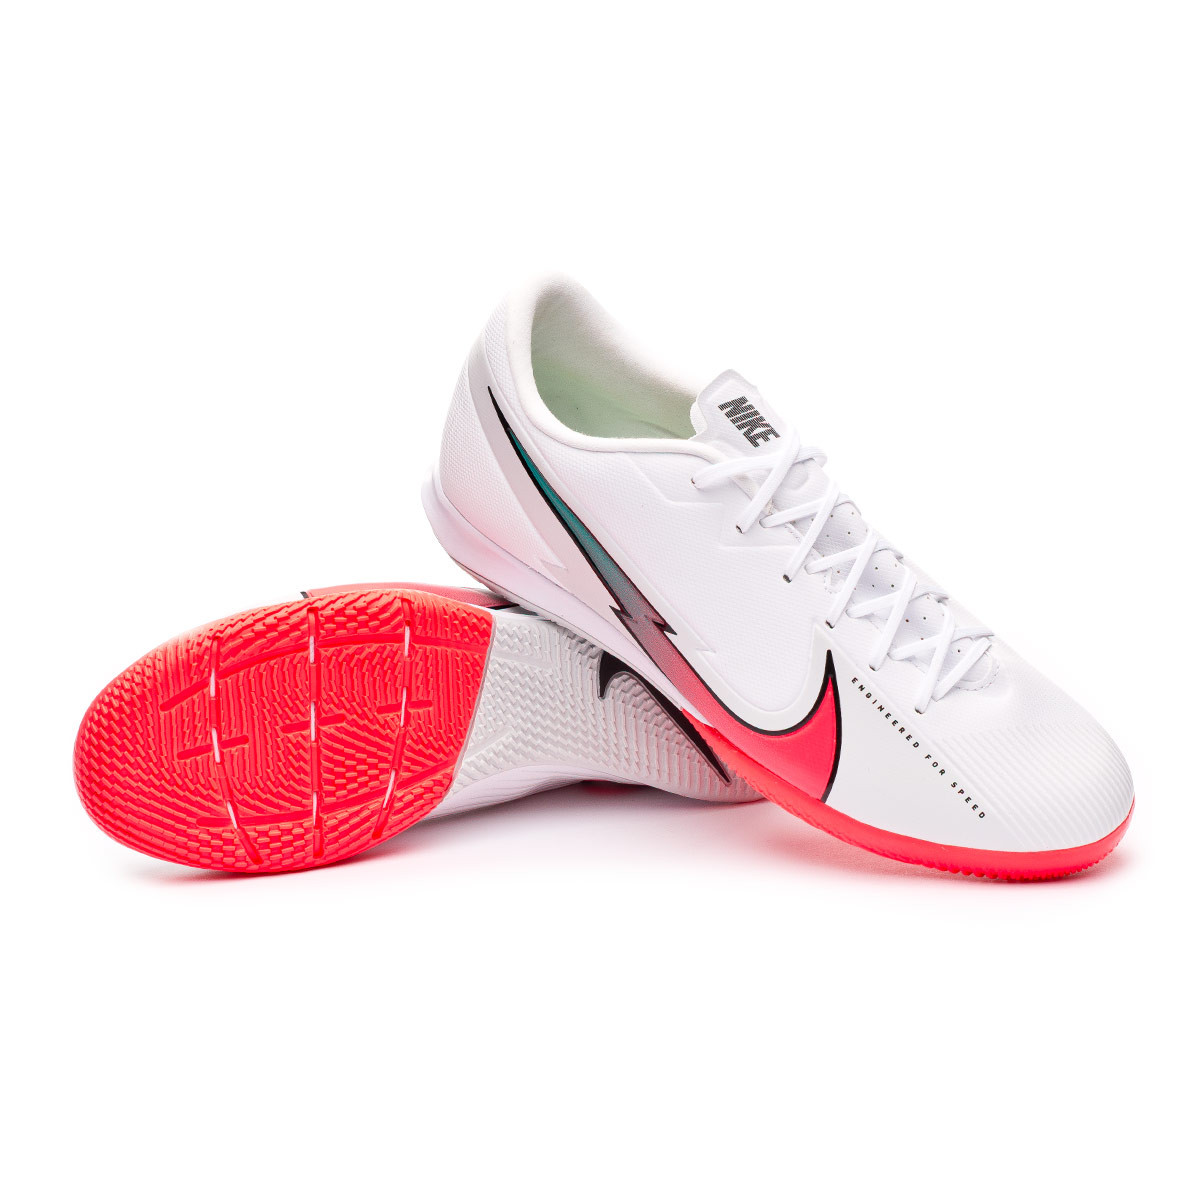 Chaussure de futsal Nike Mercurial 